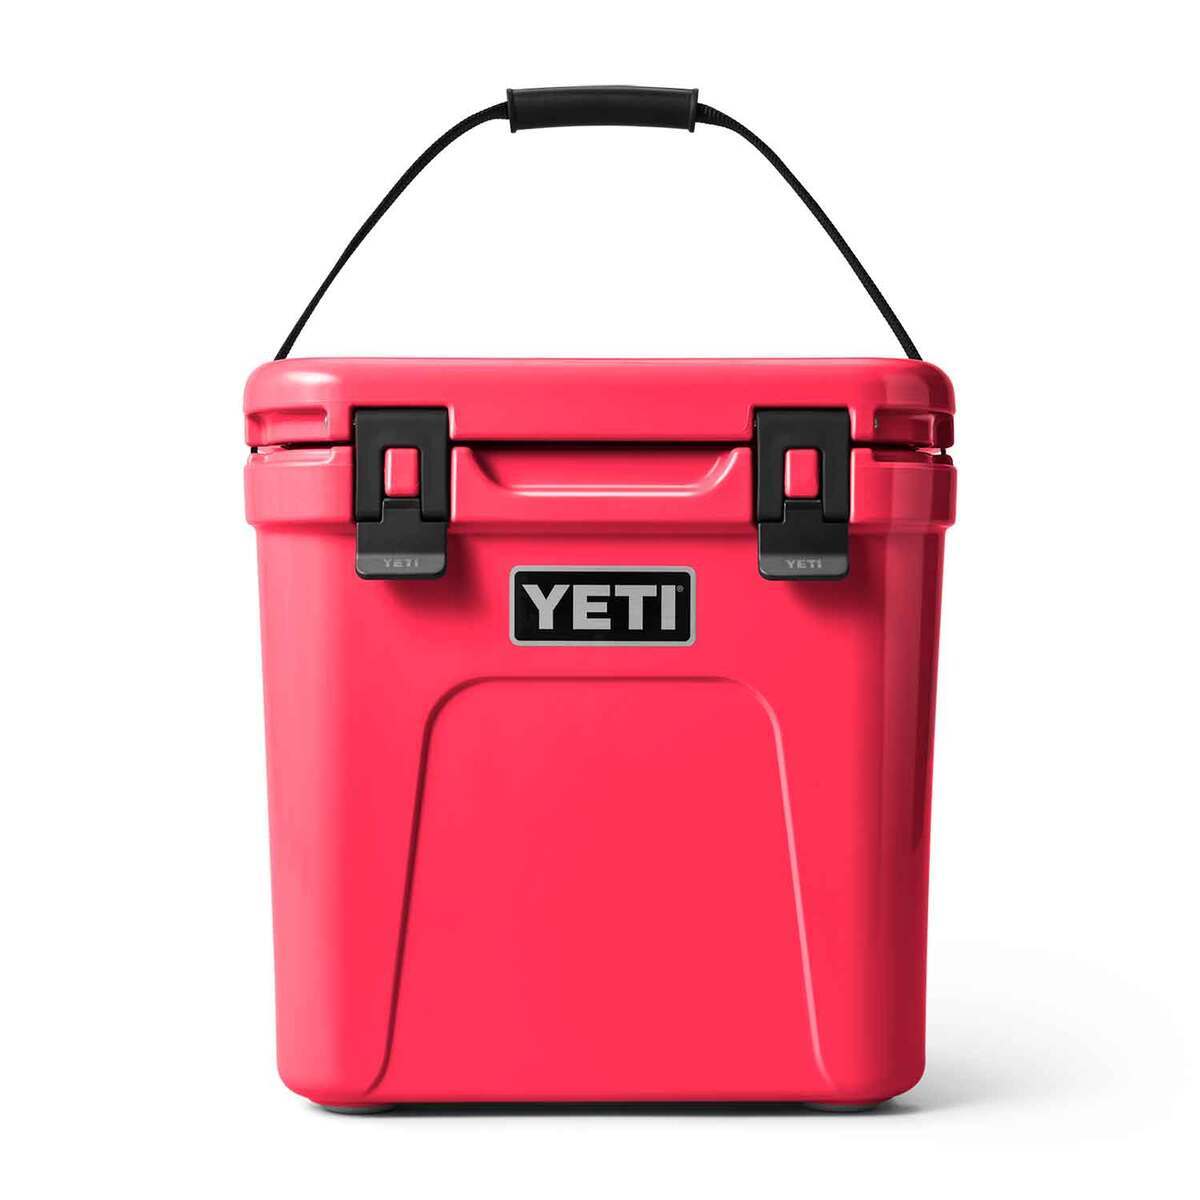 YETI Roadie 24 Hard Cooler - Bimini Pink | Sportsman's Warehouse